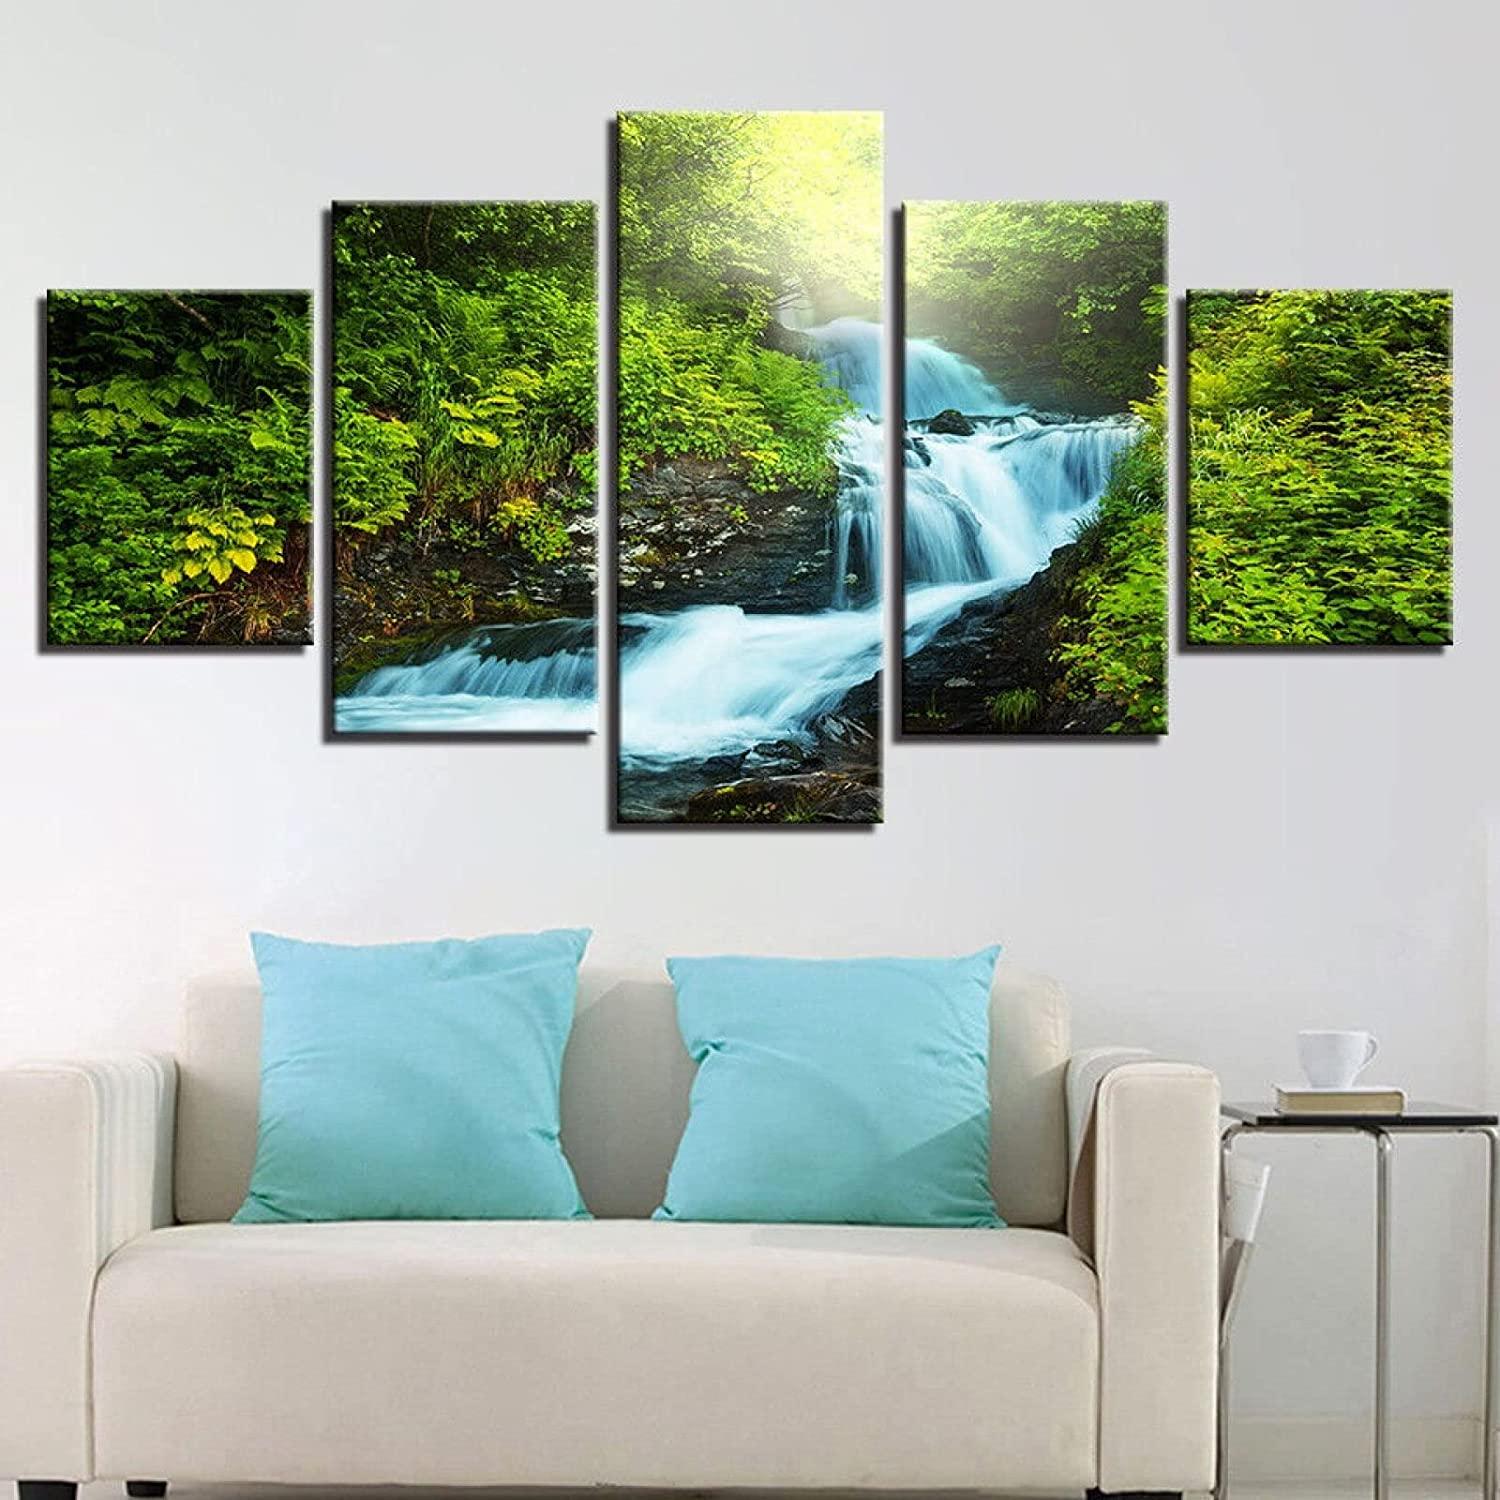 Tropical Rain Forest Waterfall 5 Panel Canvas Print Wall Art - GotItHere.com